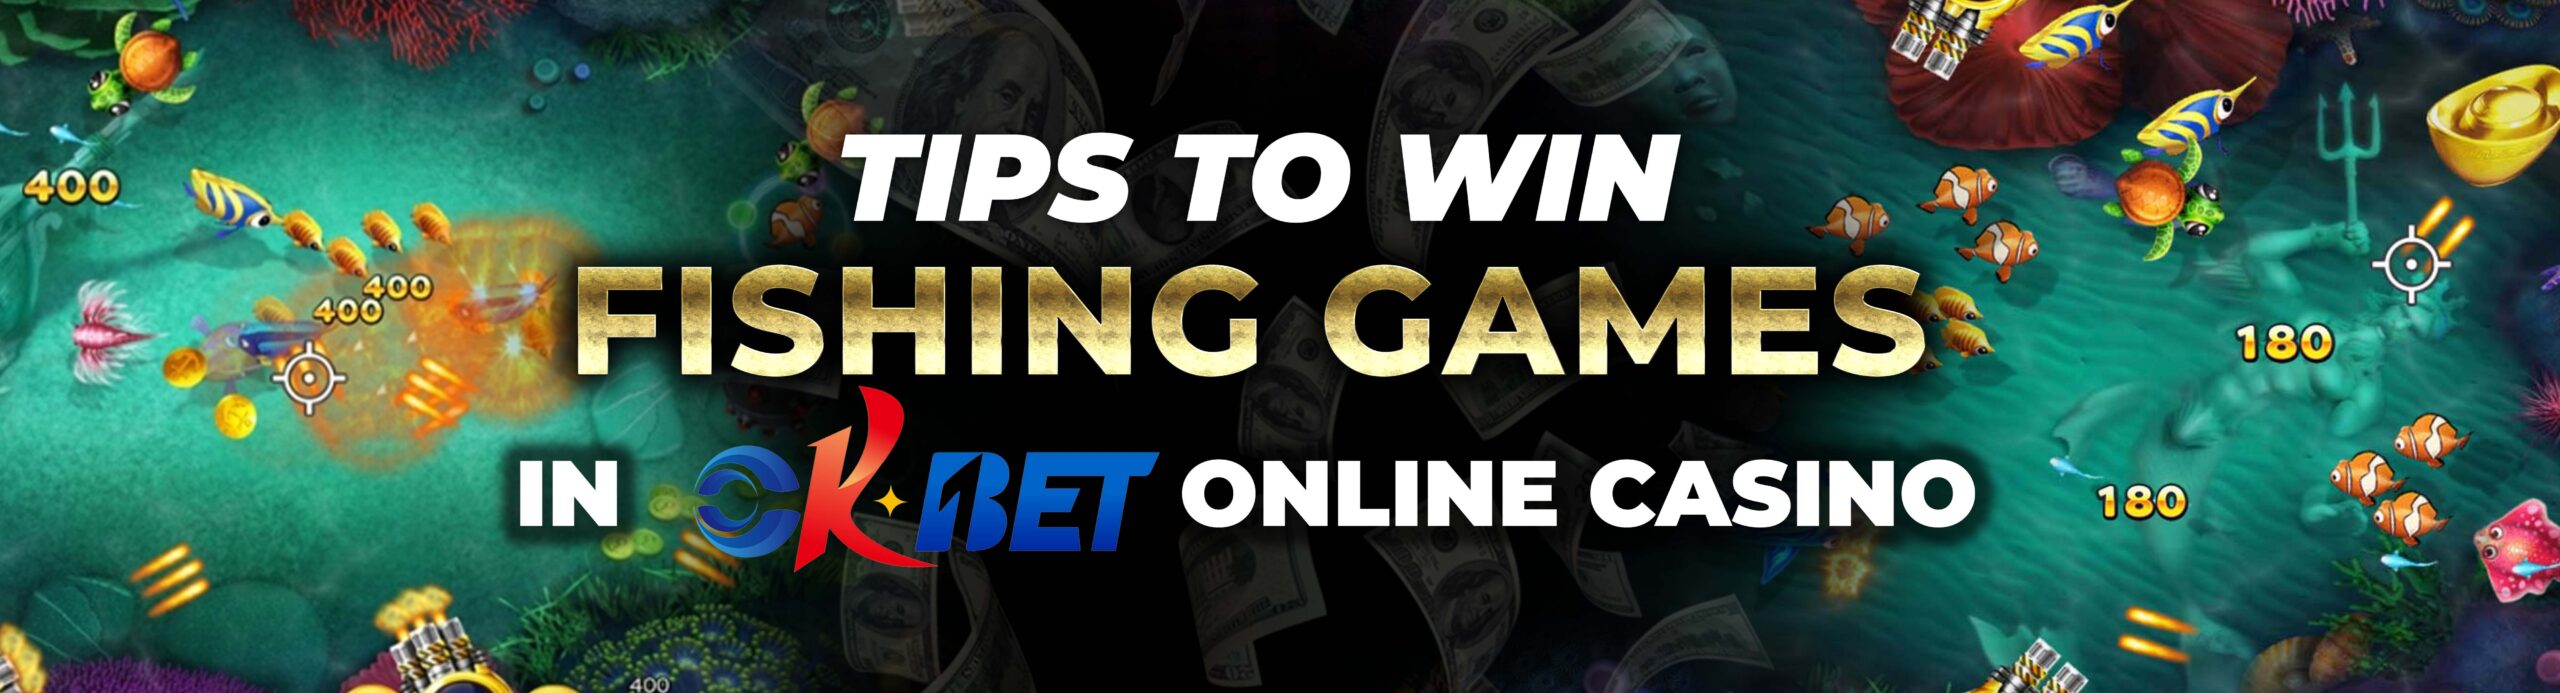 Real Money Fishing Games in OKBet Online Casino - OKBET online casino